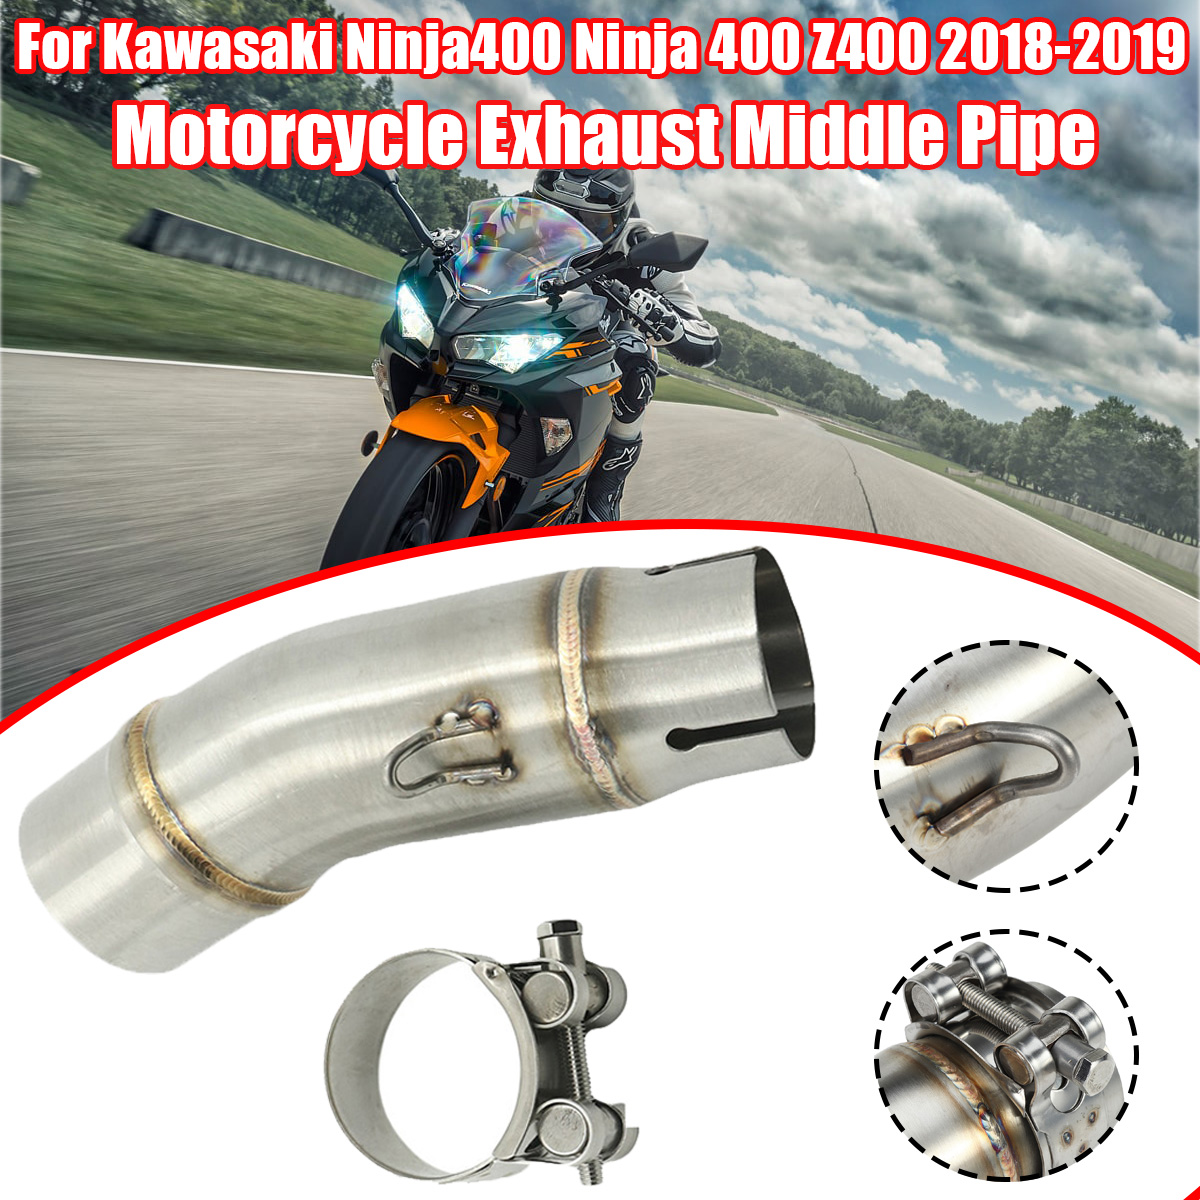 Motorcycle Exhaust Tip Escape Baffle Muffler Mid Pipe for Kawasaki Ninja 400 250